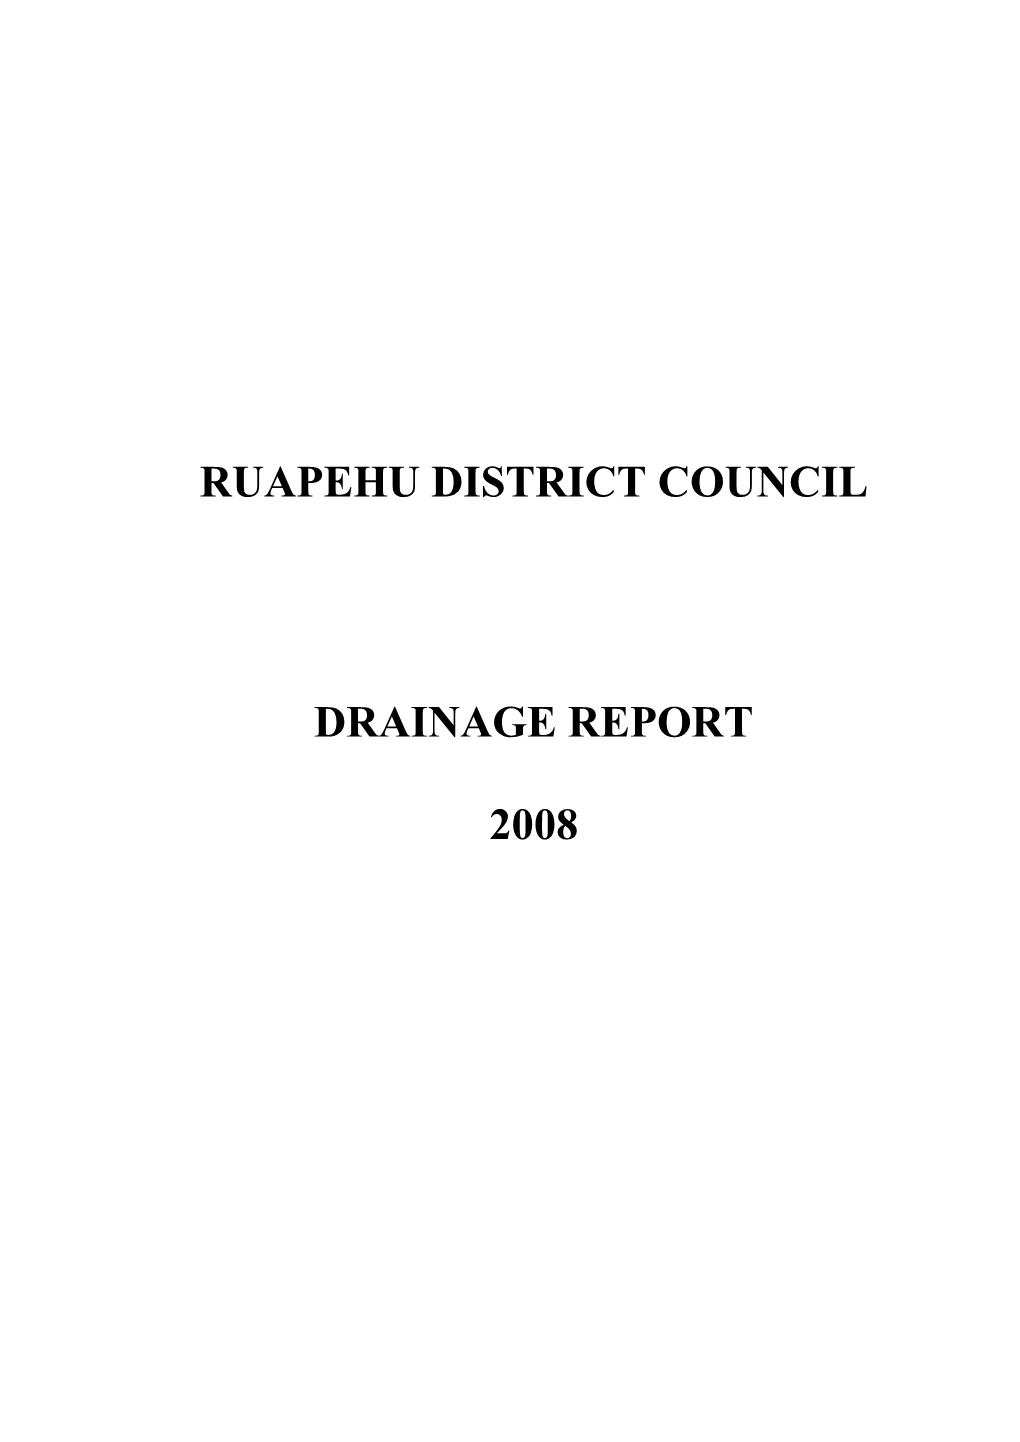 Drainage Report 2008